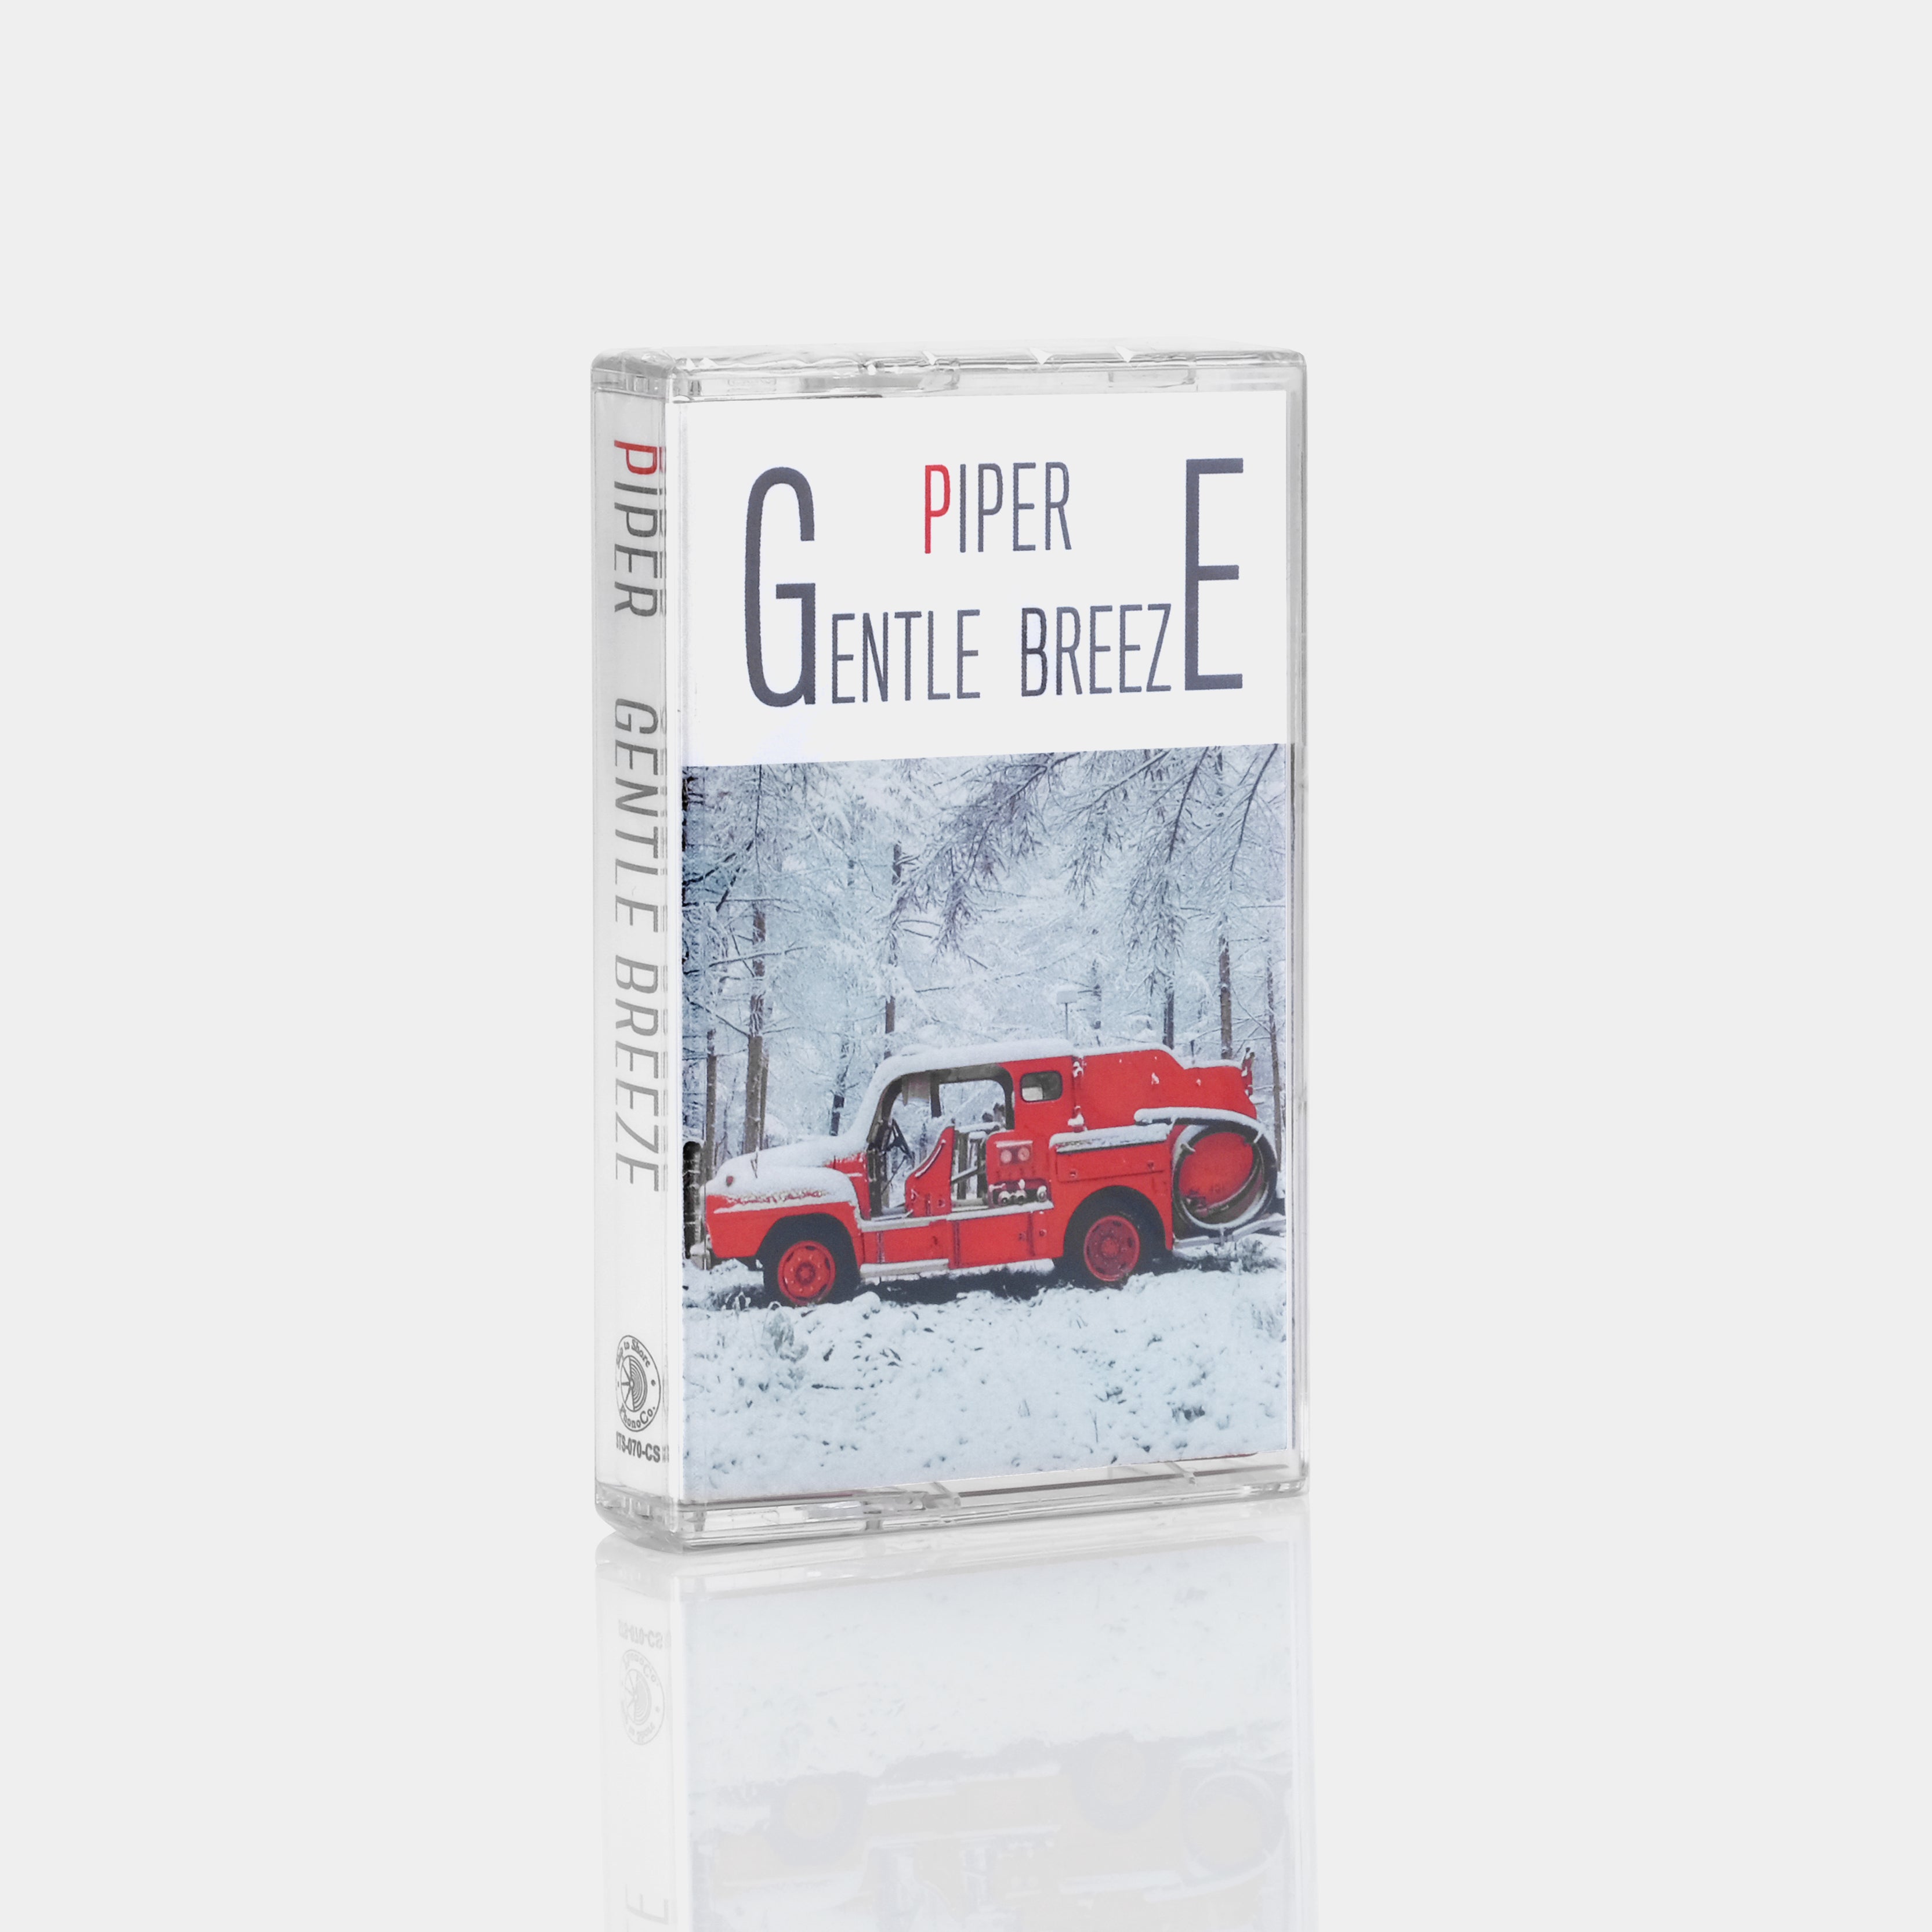 Piper - Gentle Breeze Cassette Tape